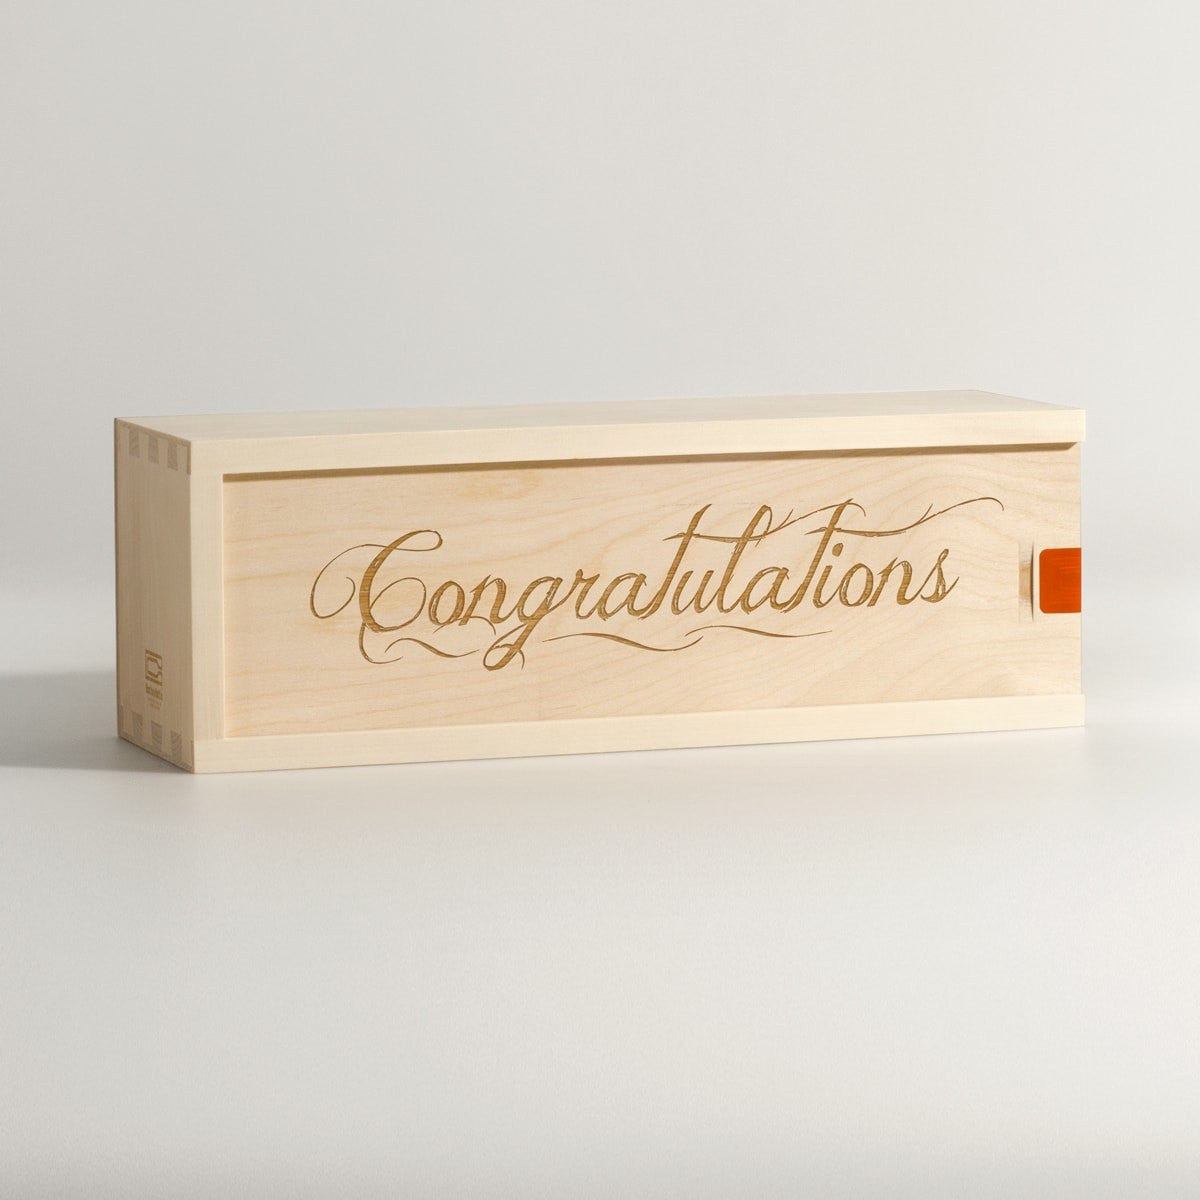 Congratulations - Wine Box - Main Image